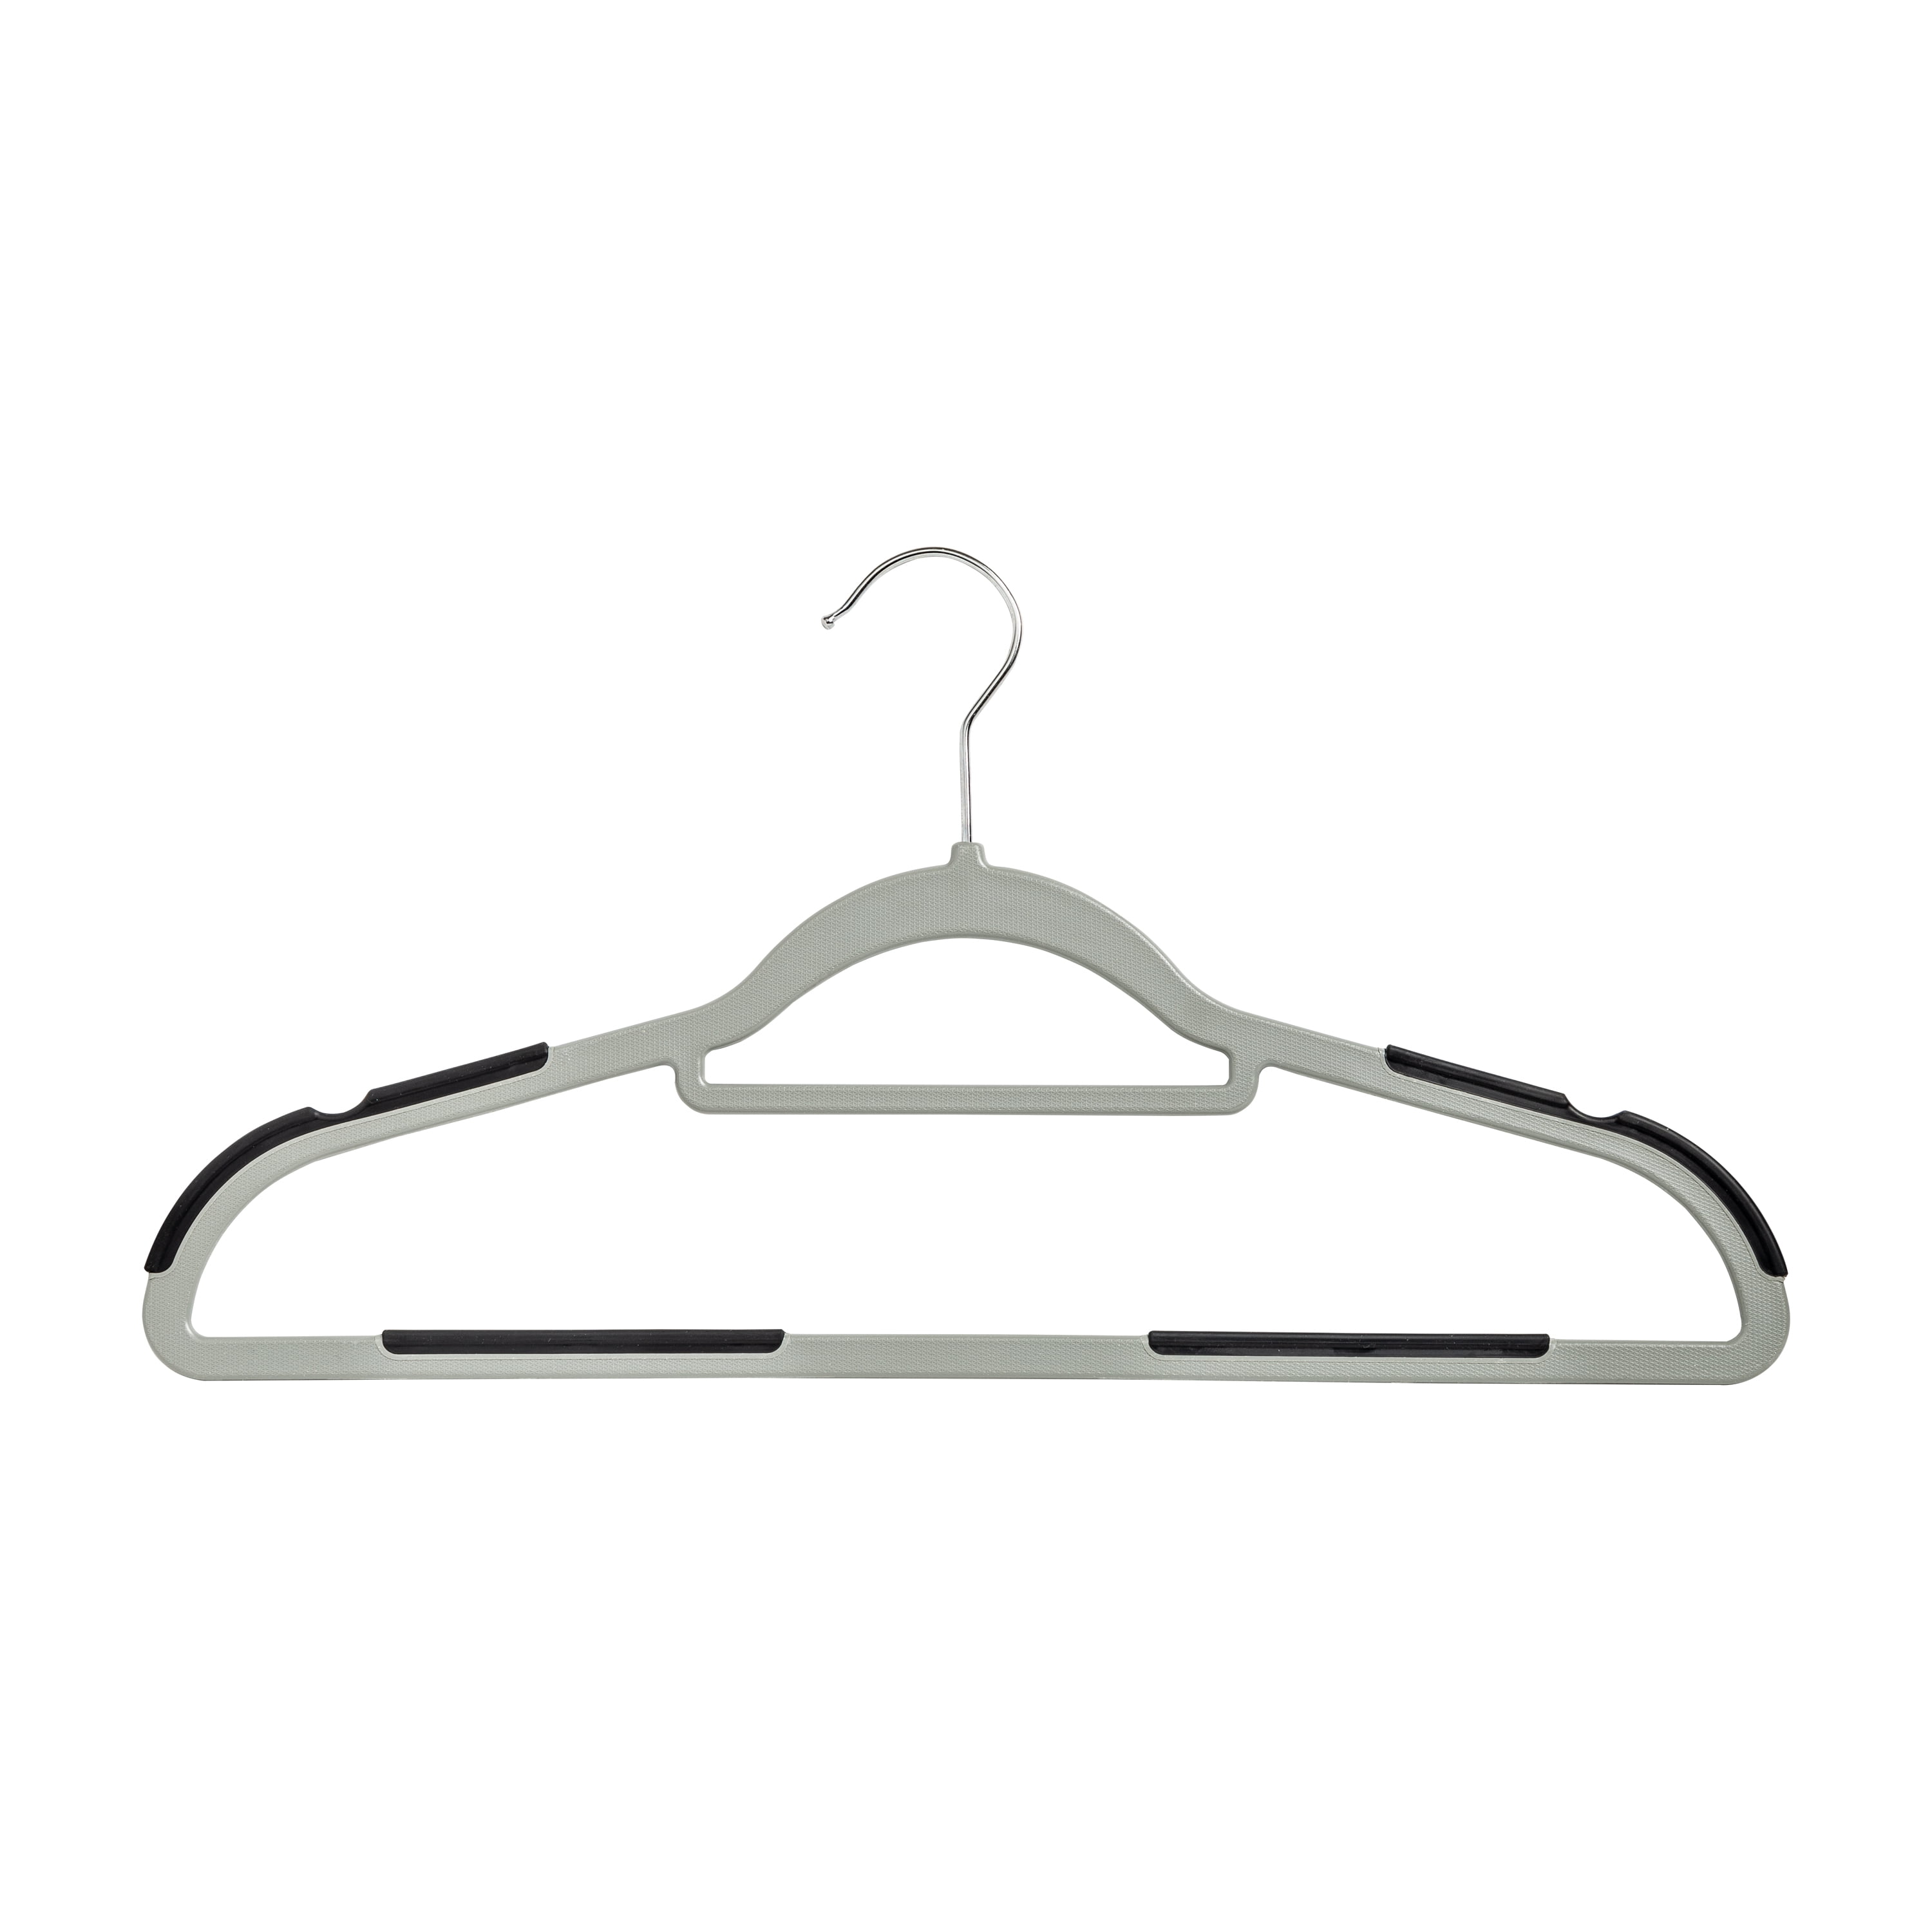 Whitmor Slim Sure-Grip® Plastic Hangers - White/Gray, 10 pk - Pick